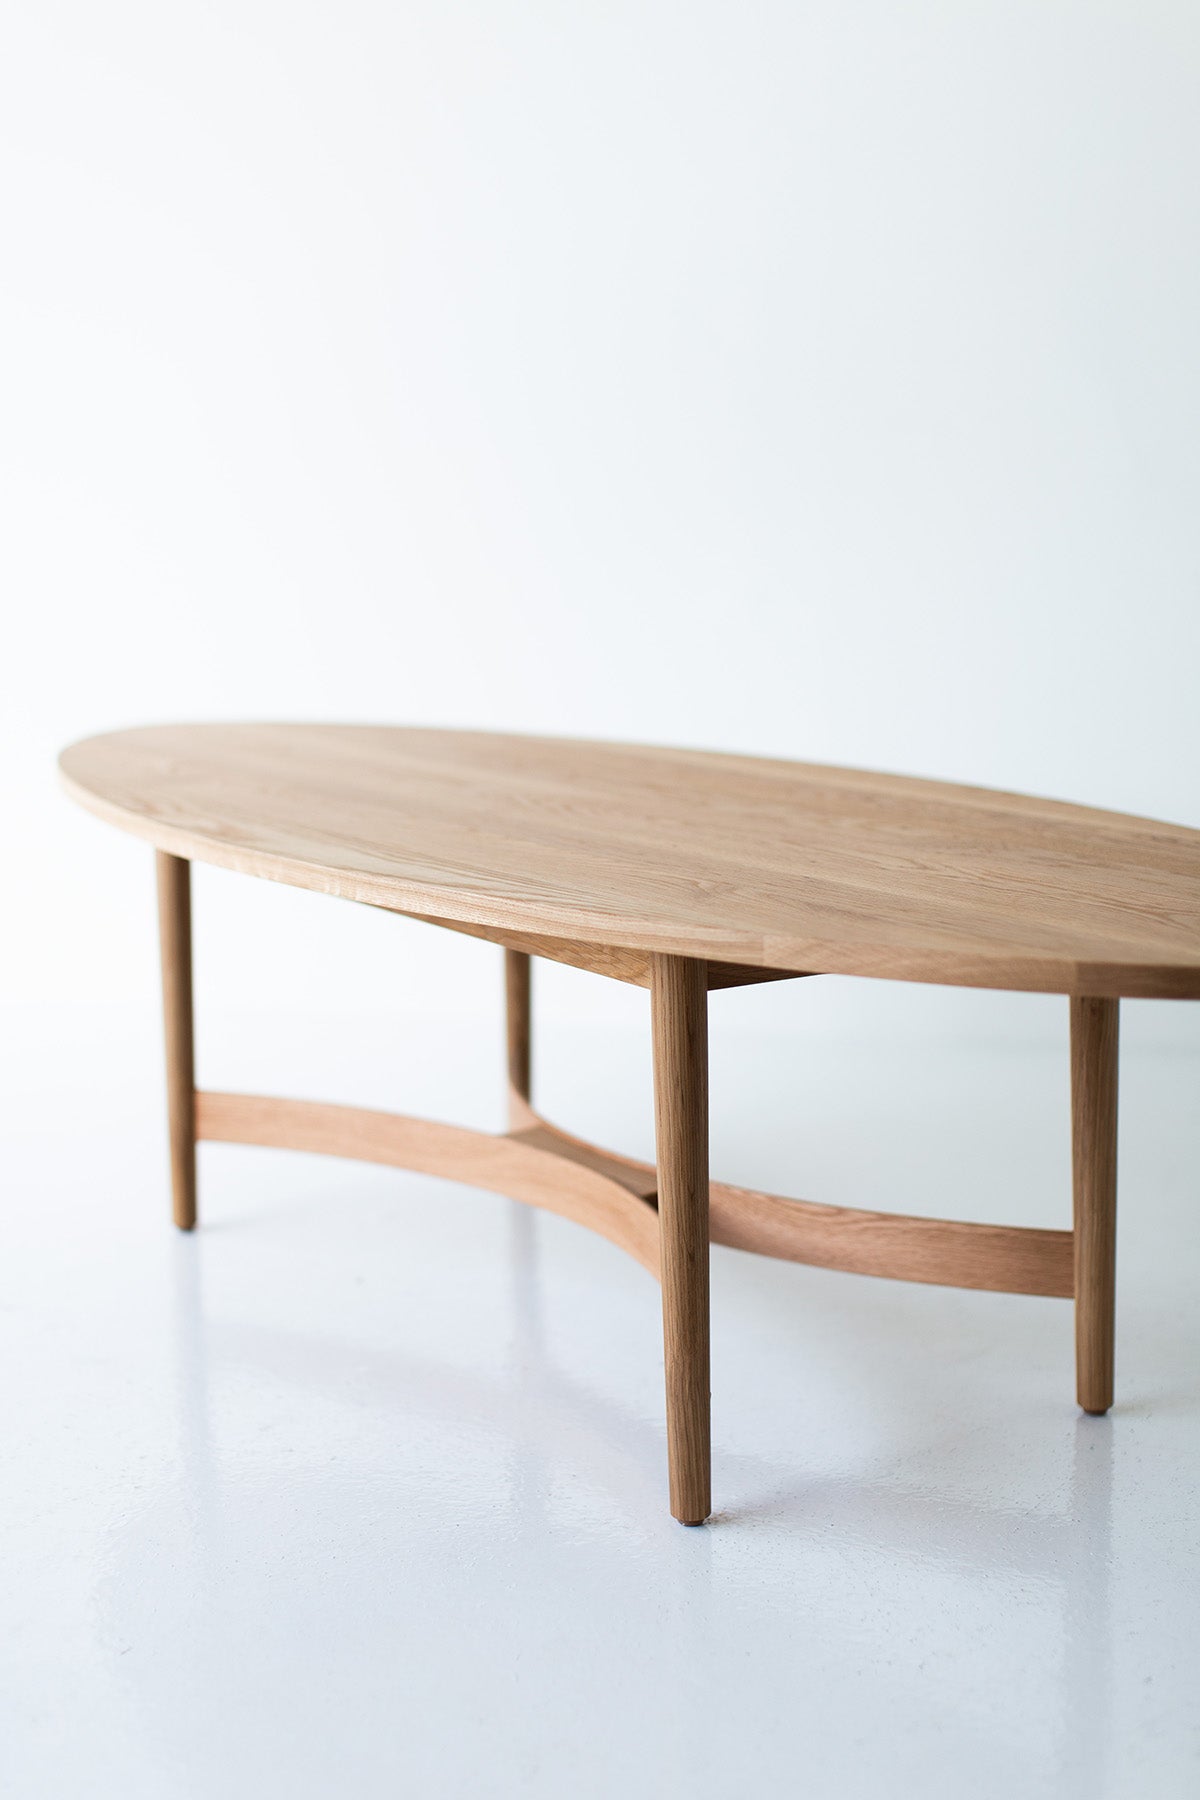 Peabody Modern Oak Coffee Table for Craft Associates - 2312